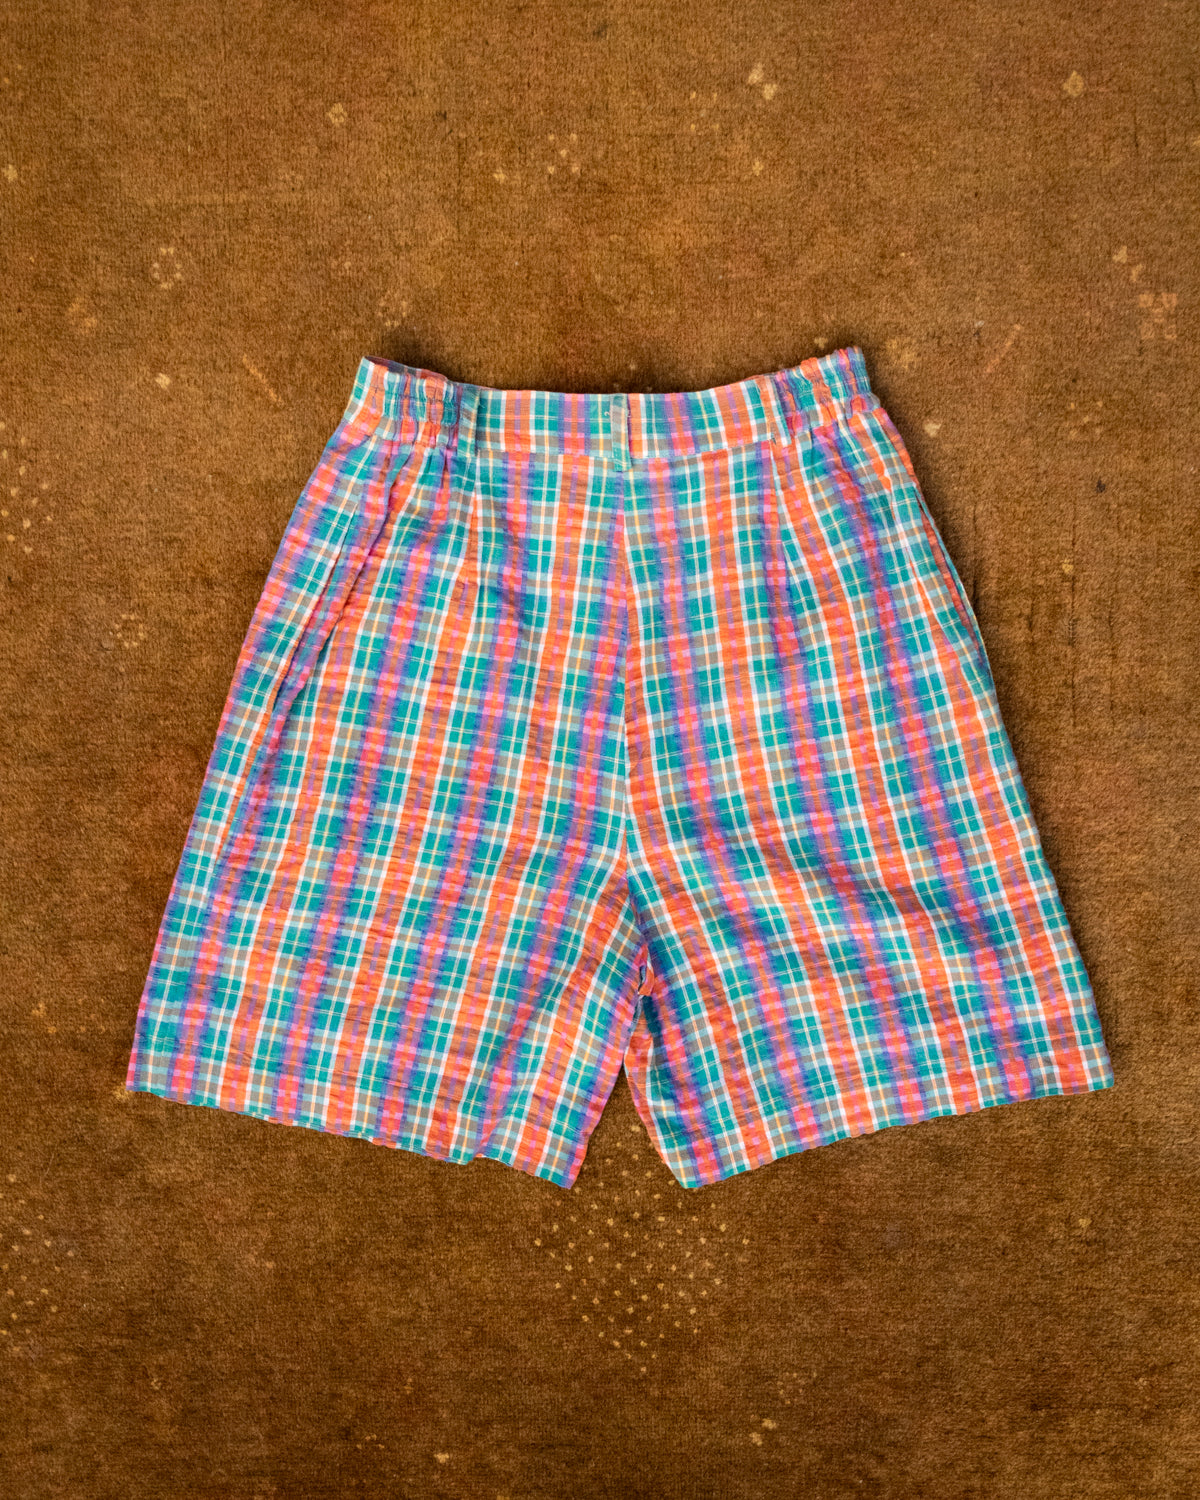 Retro Rainbow Seersucker Check Shorts